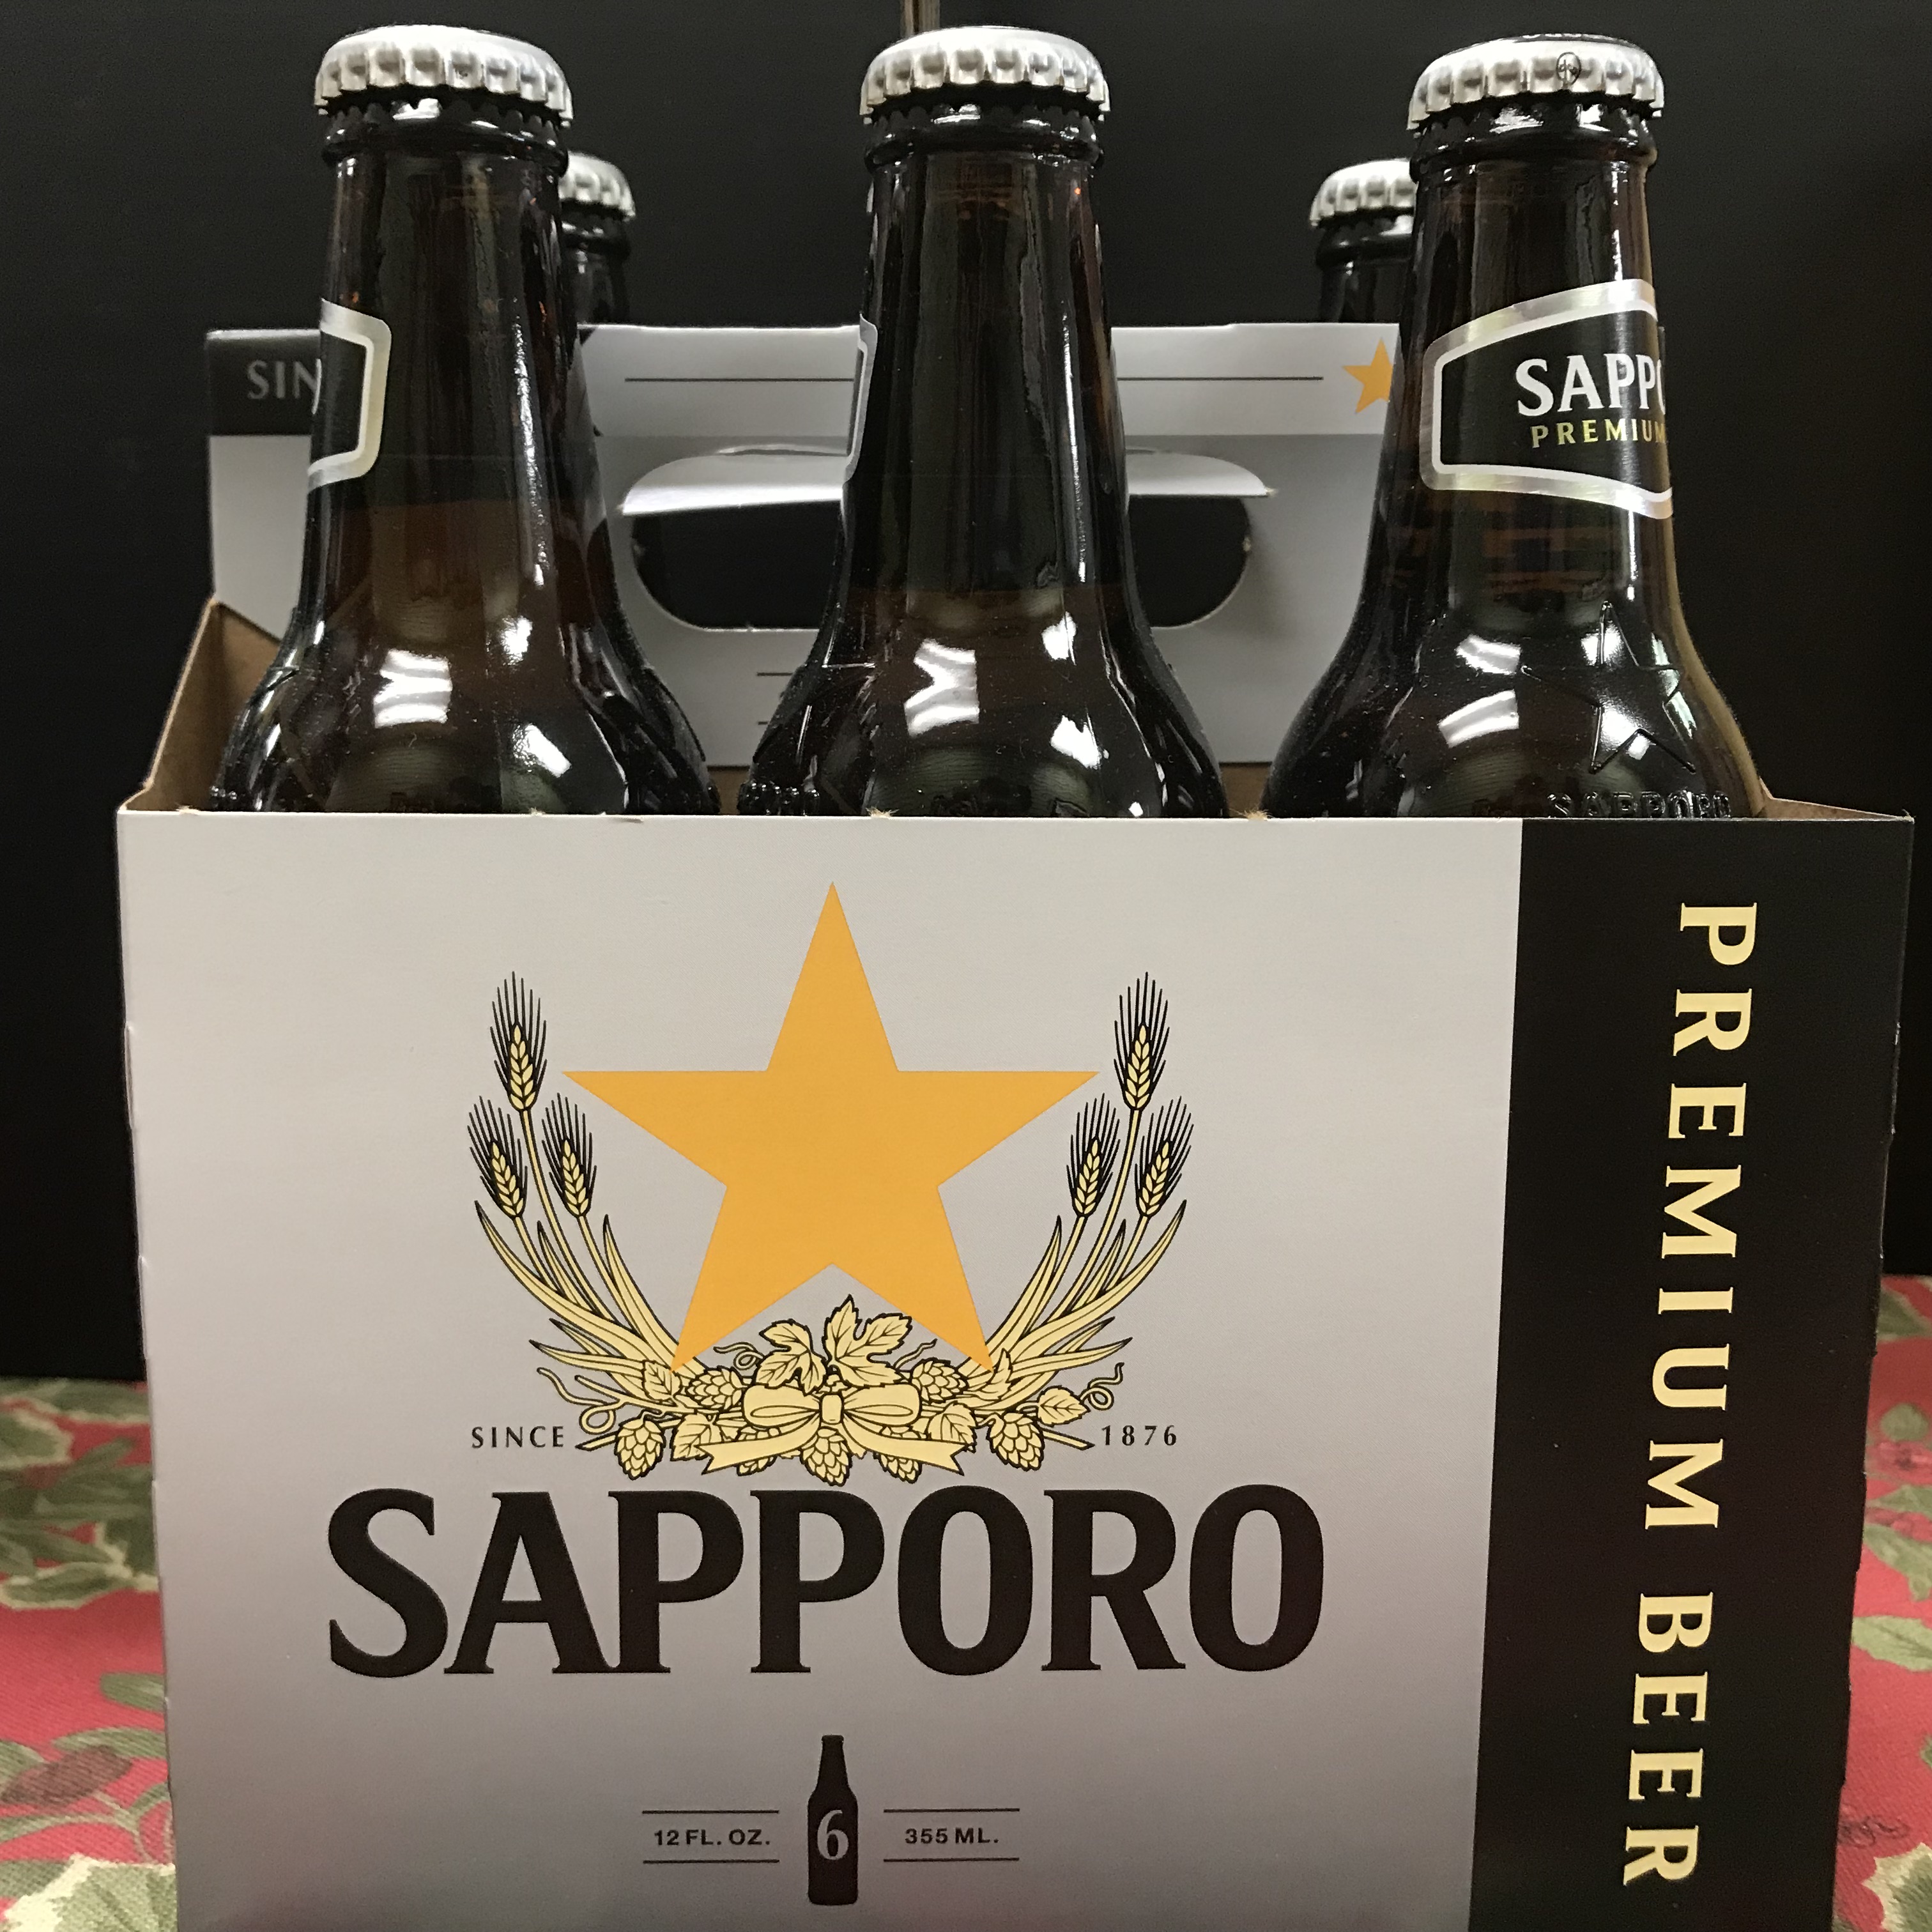 Sapporo Premium beer 6 x 12 oz